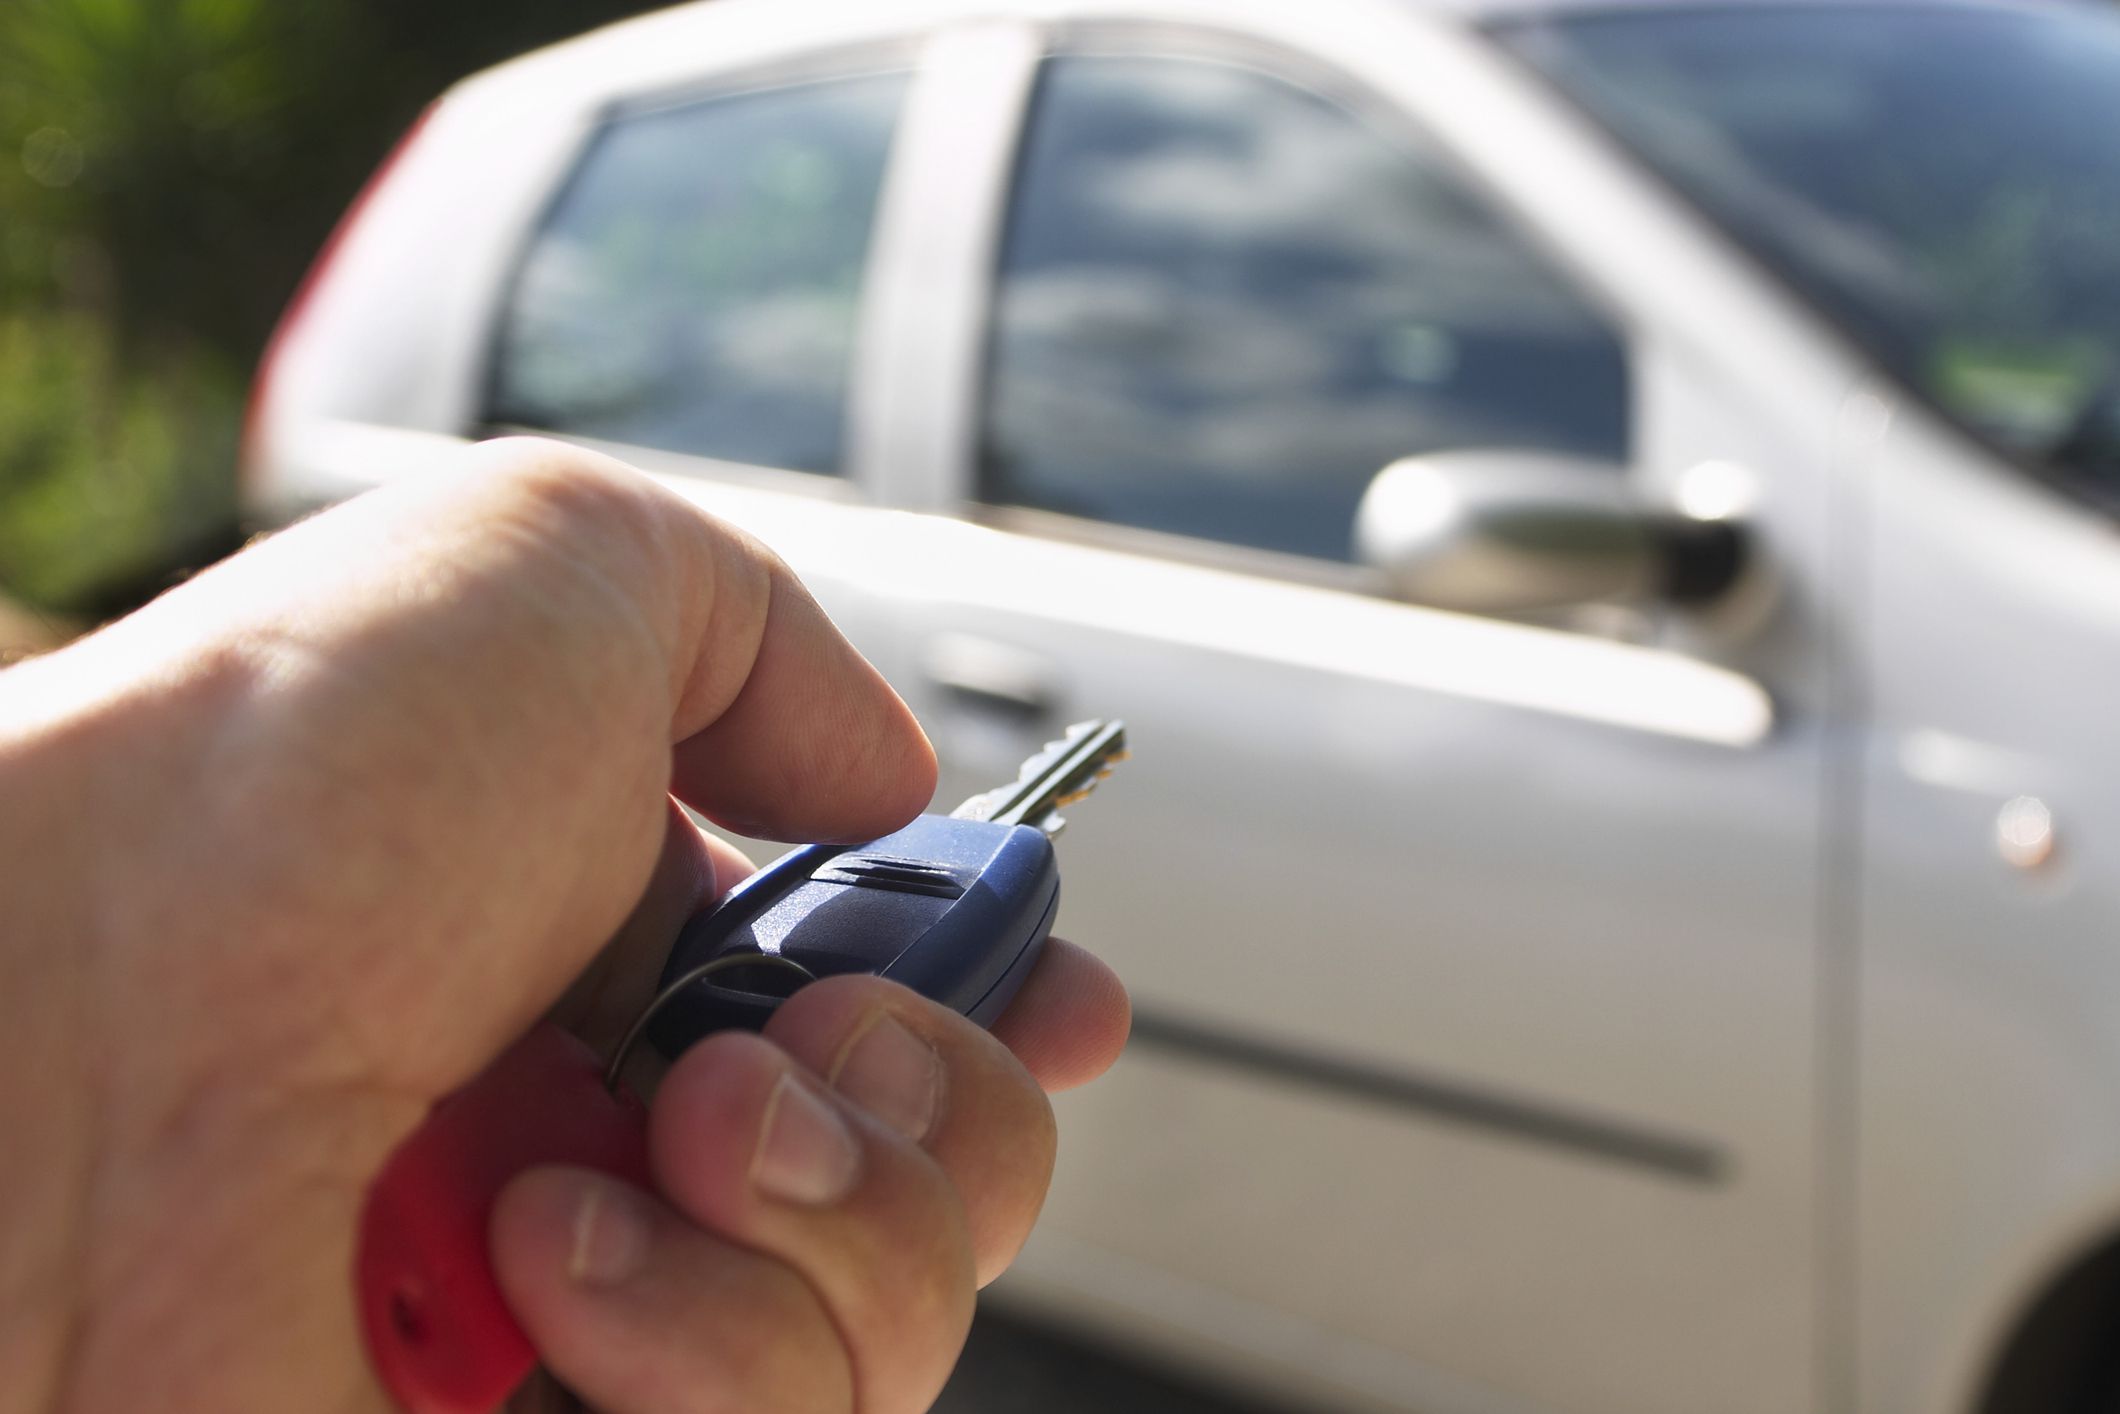 How To Find Car Keys